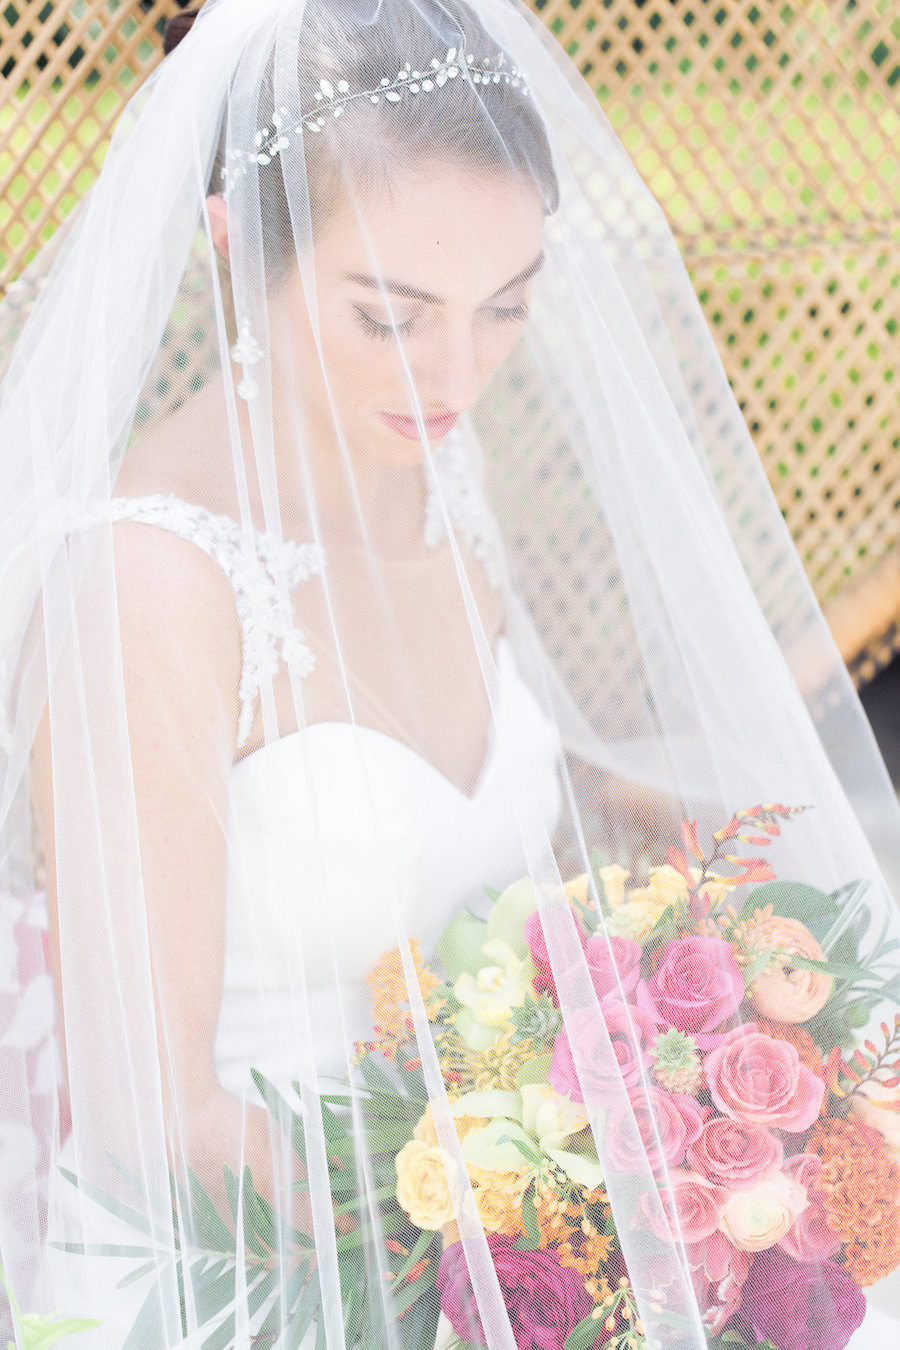 Outdoor Florida Bridal Wedding Portrait |Sweetheart Wedding Dress Portrait with Tropical, Vibrant Pink, Orange and Yellow Wedding Bouquet